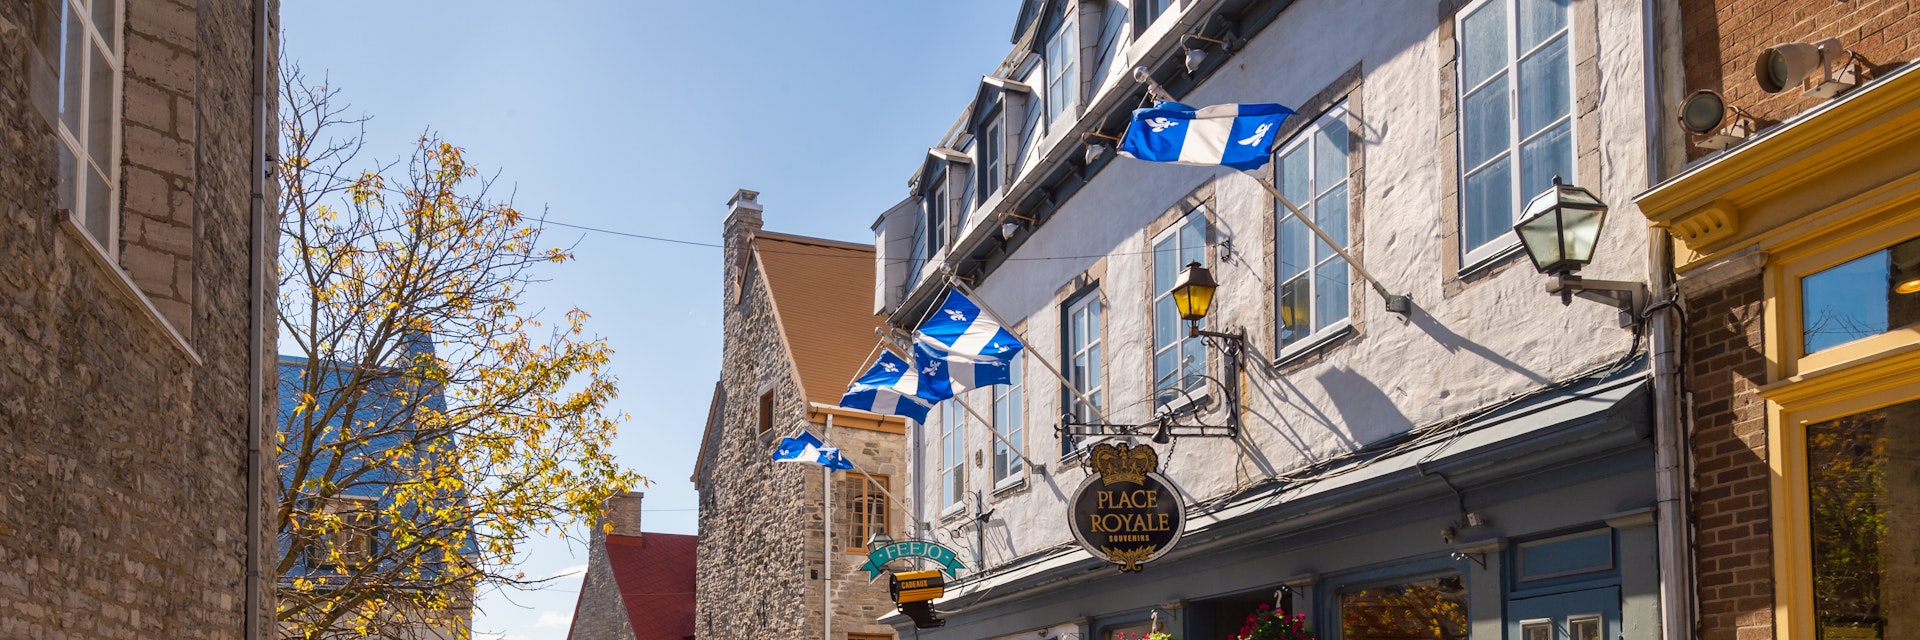 Quebec City, Canada - 5 October 2019: Quebec flags on Notre-Dame street.
1179423899